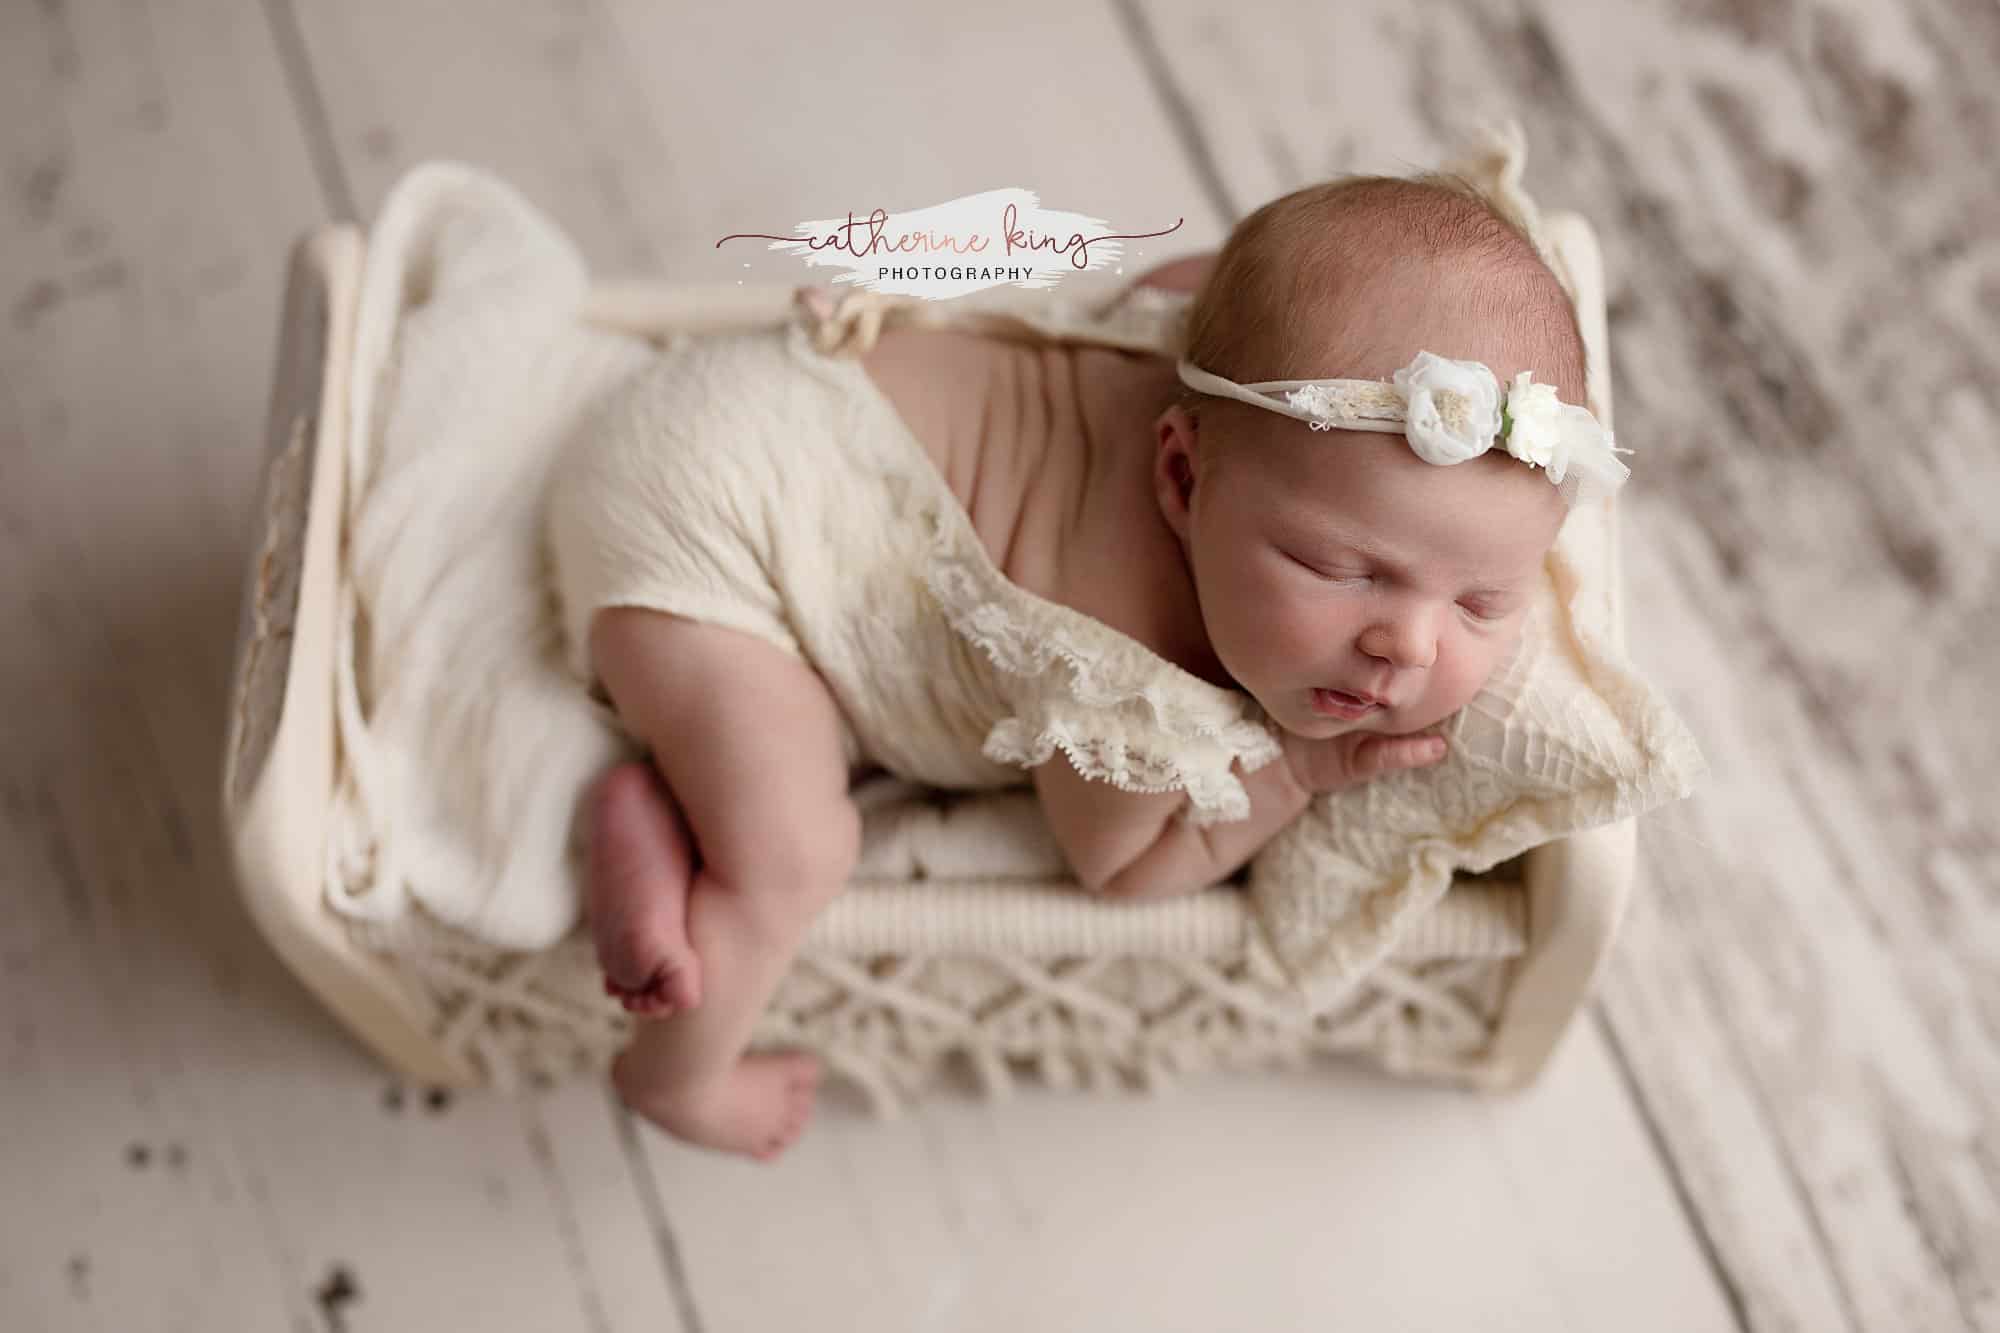 Olivia's Newborn Photography Session, Ledyard CT